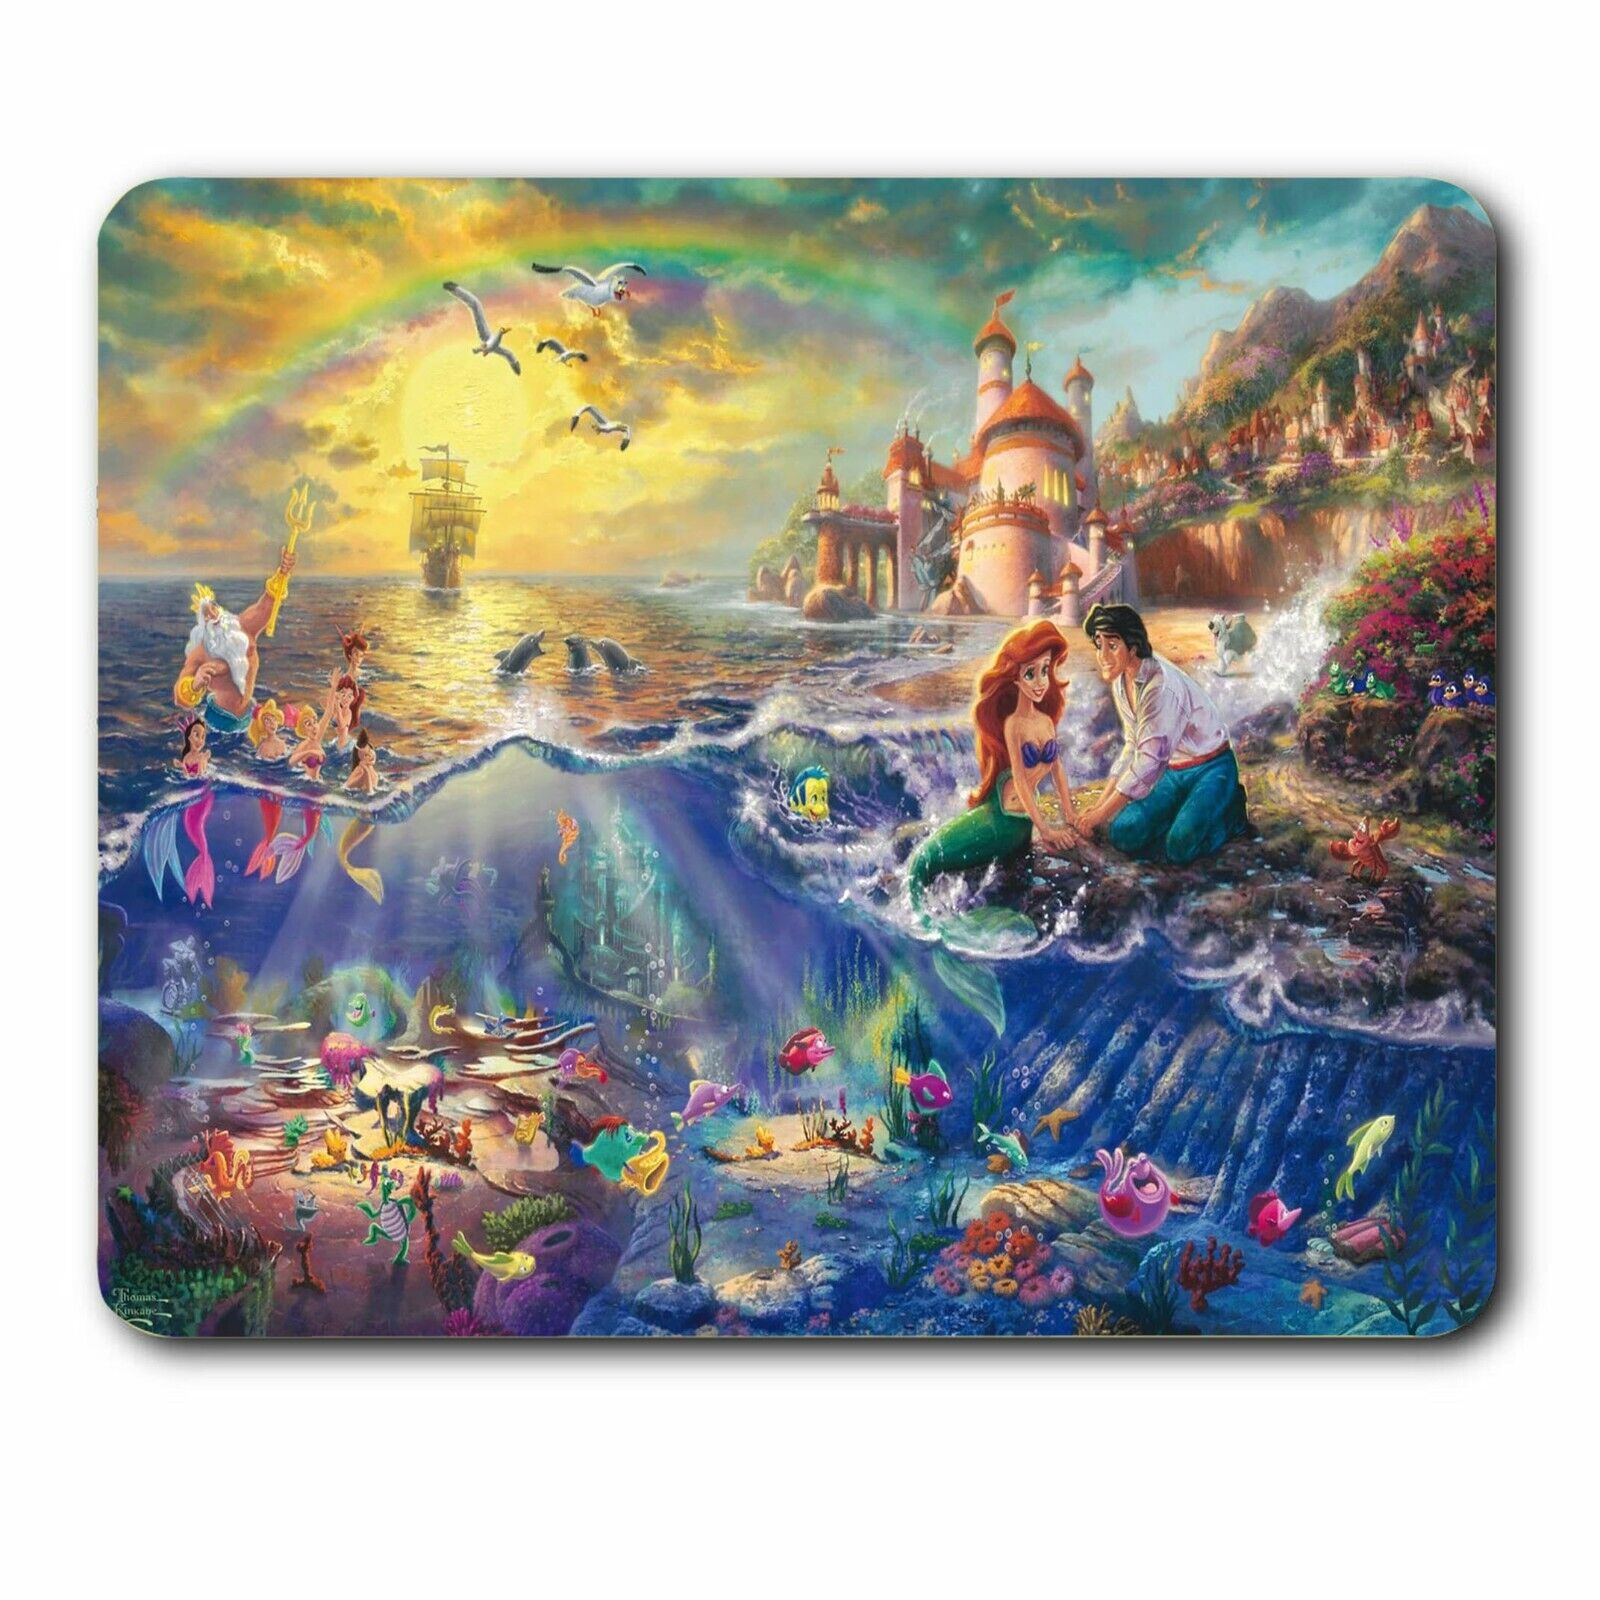 Ariel The Little Princess Mermaid Carto New Gamming Mouse pad L22 Large Mousepad